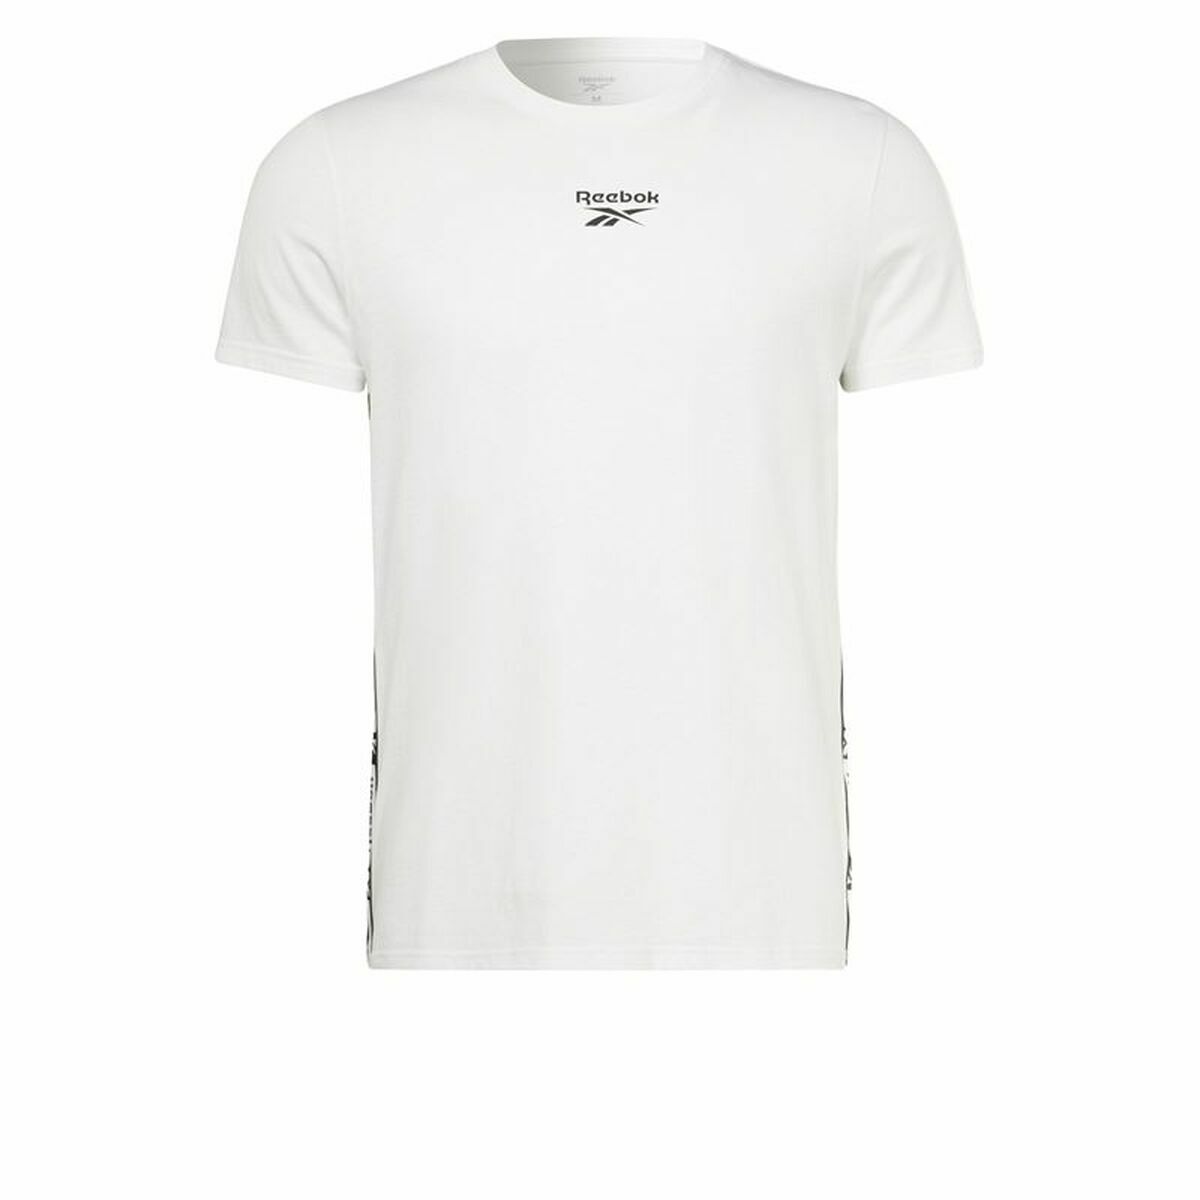 Men’s Short Sleeve T-Shirt Reebok Tape White L